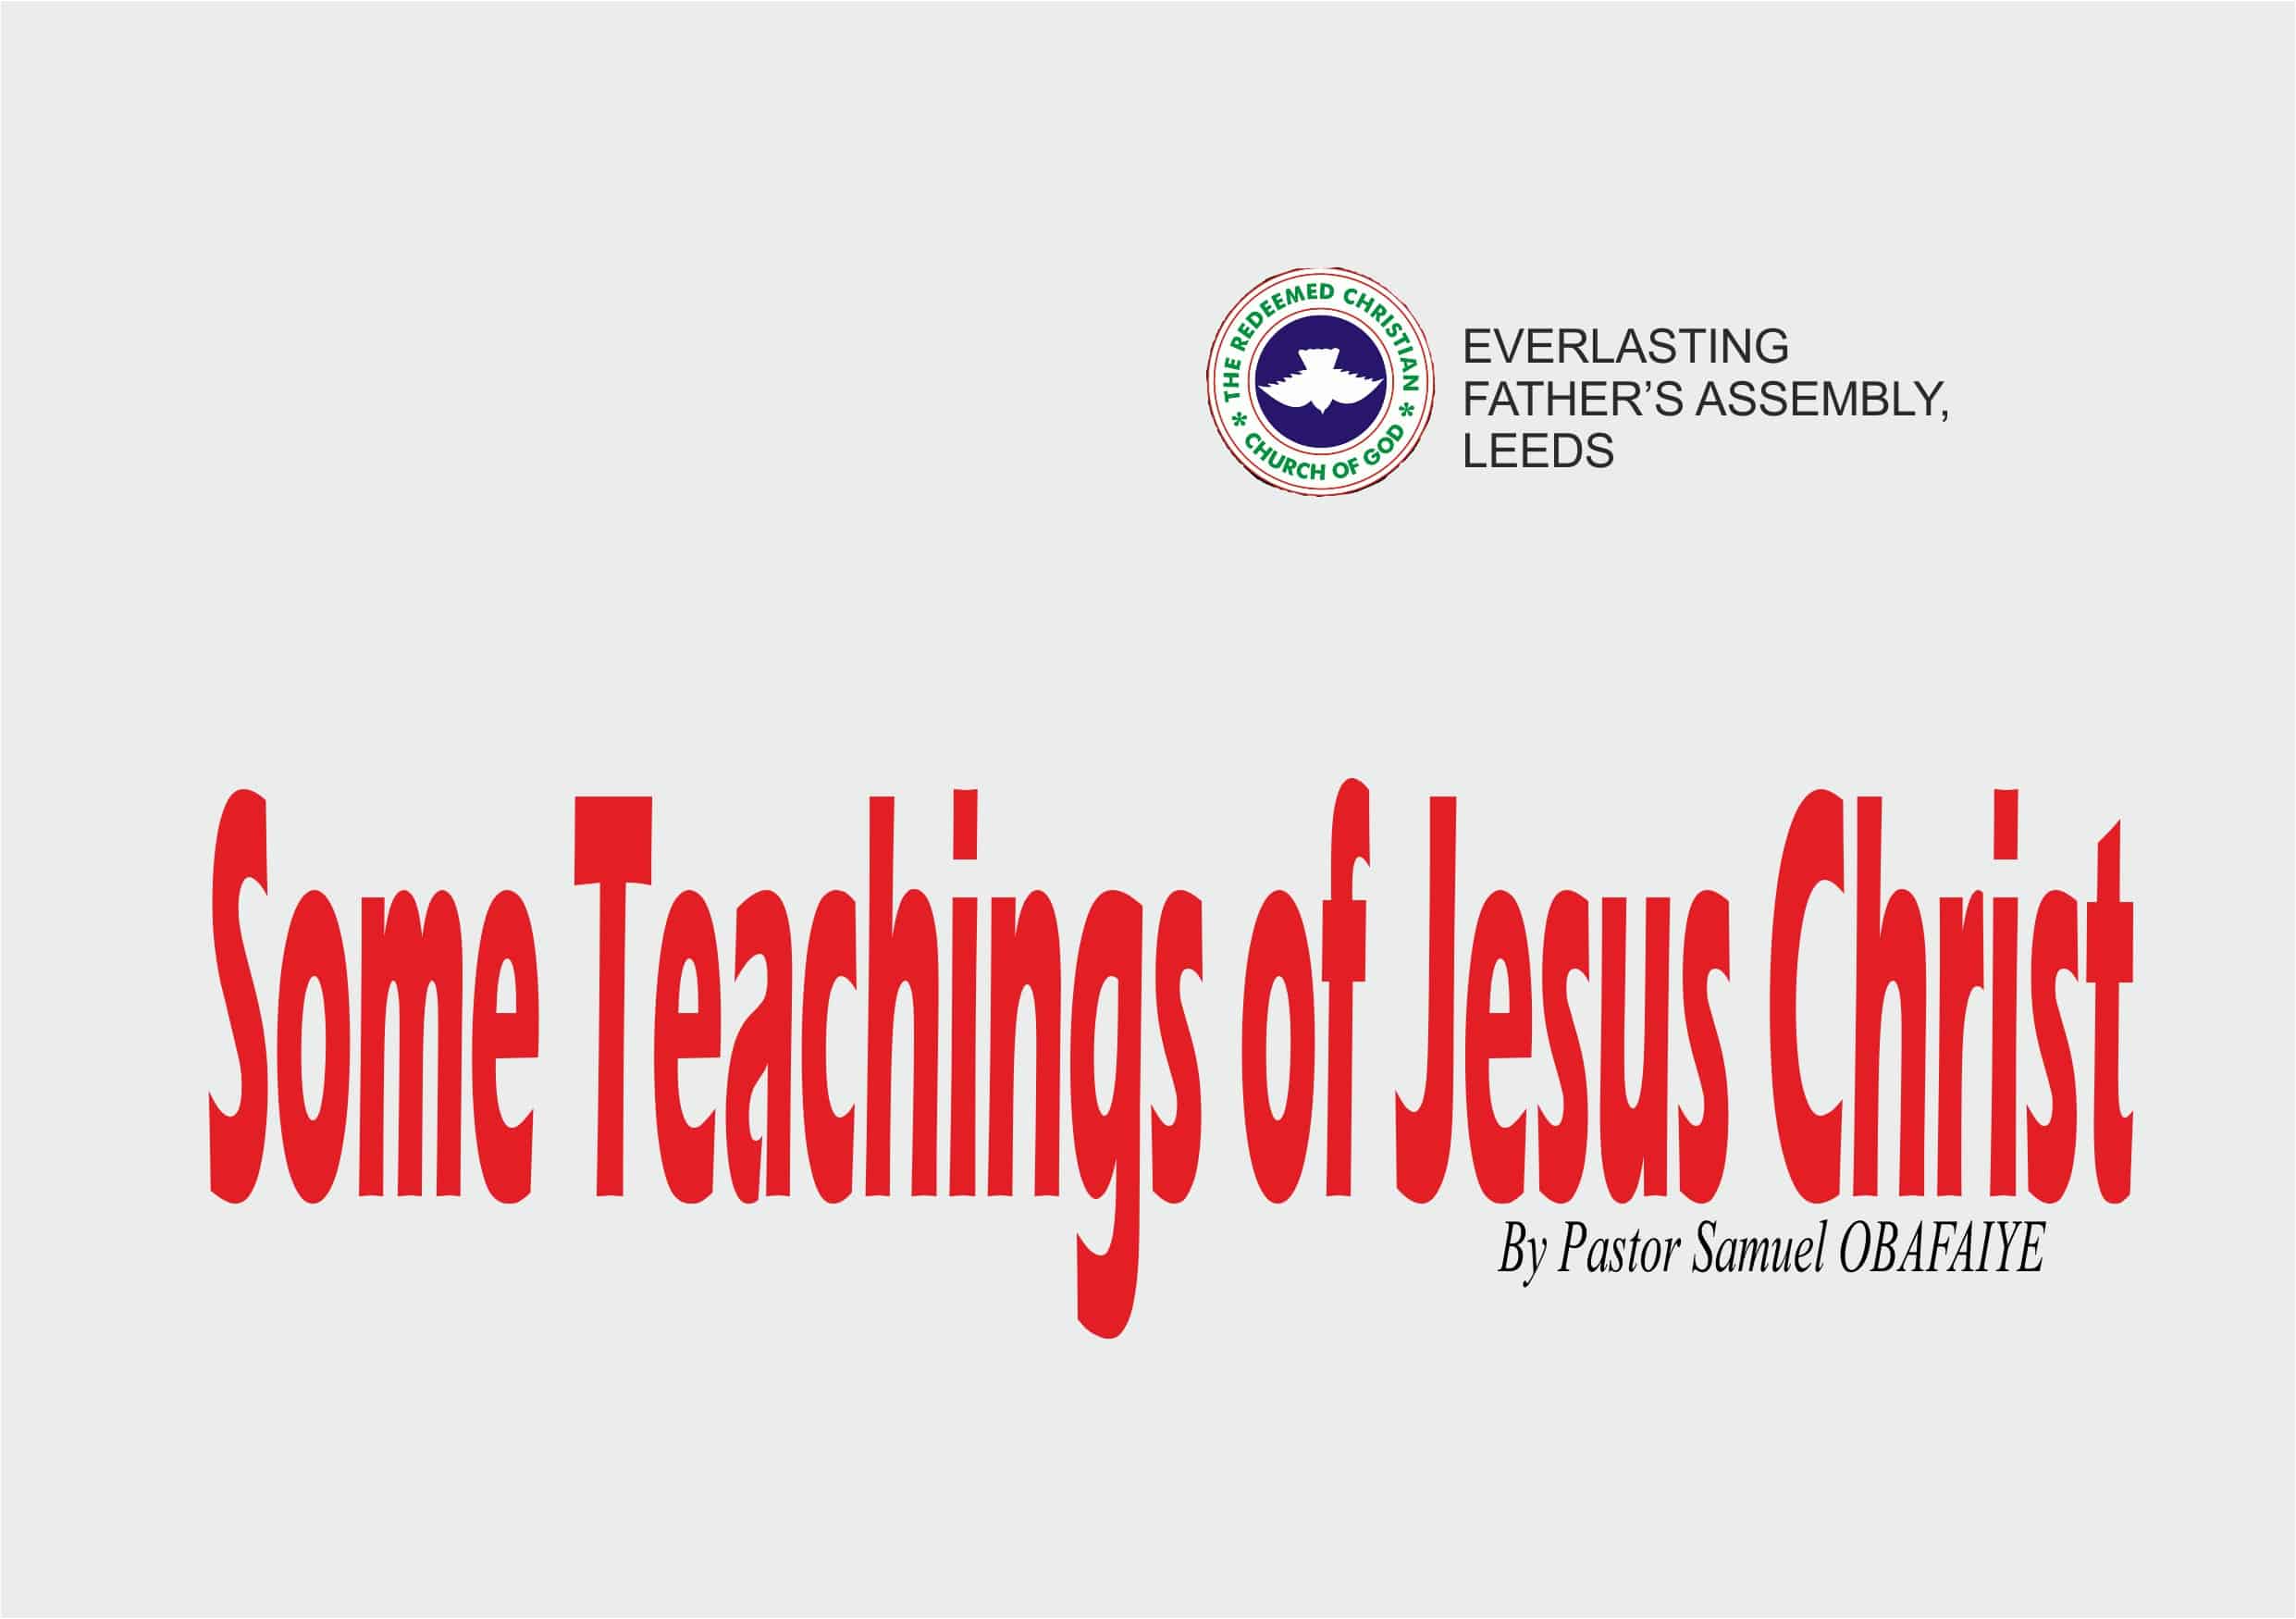 Some Teachings of Jesus Christ, by Pastor Samuel Obafaiye